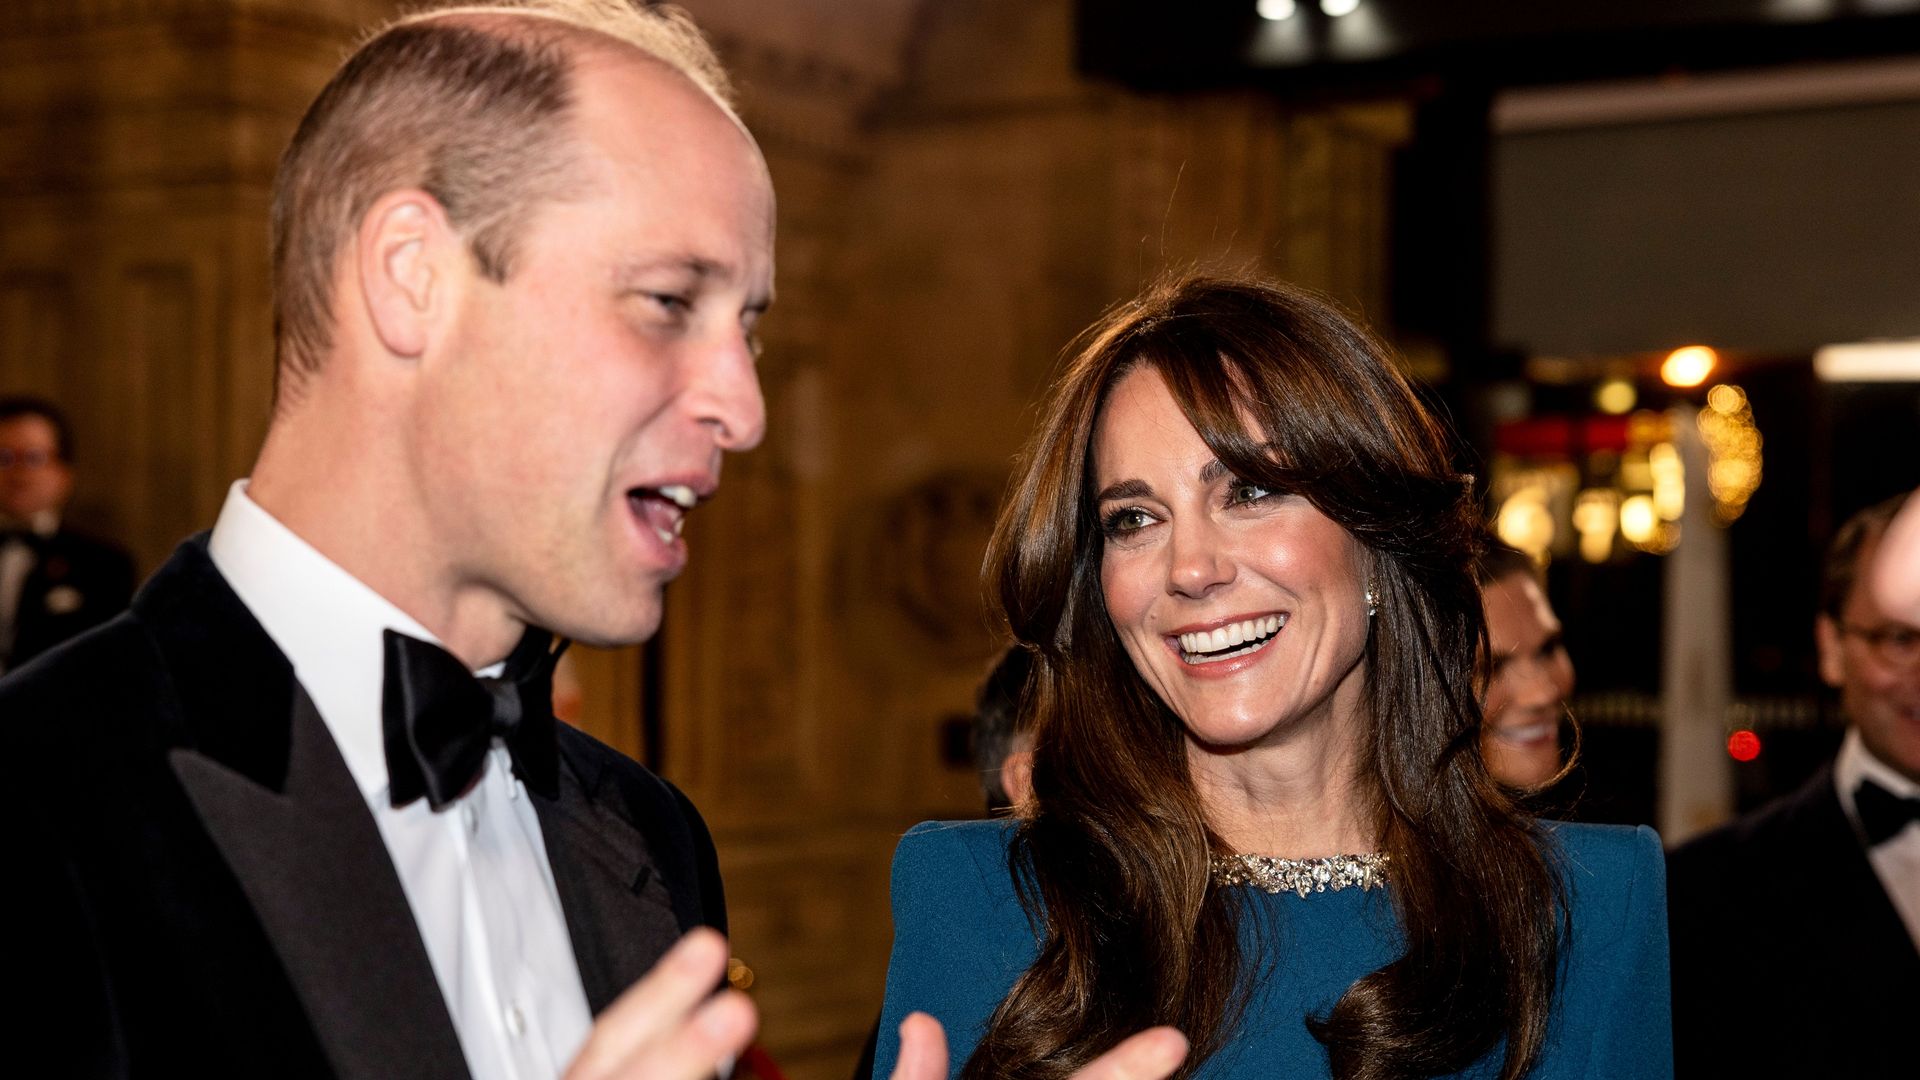 Kate Middleton smiling at Prince William at Royal Variety Performance